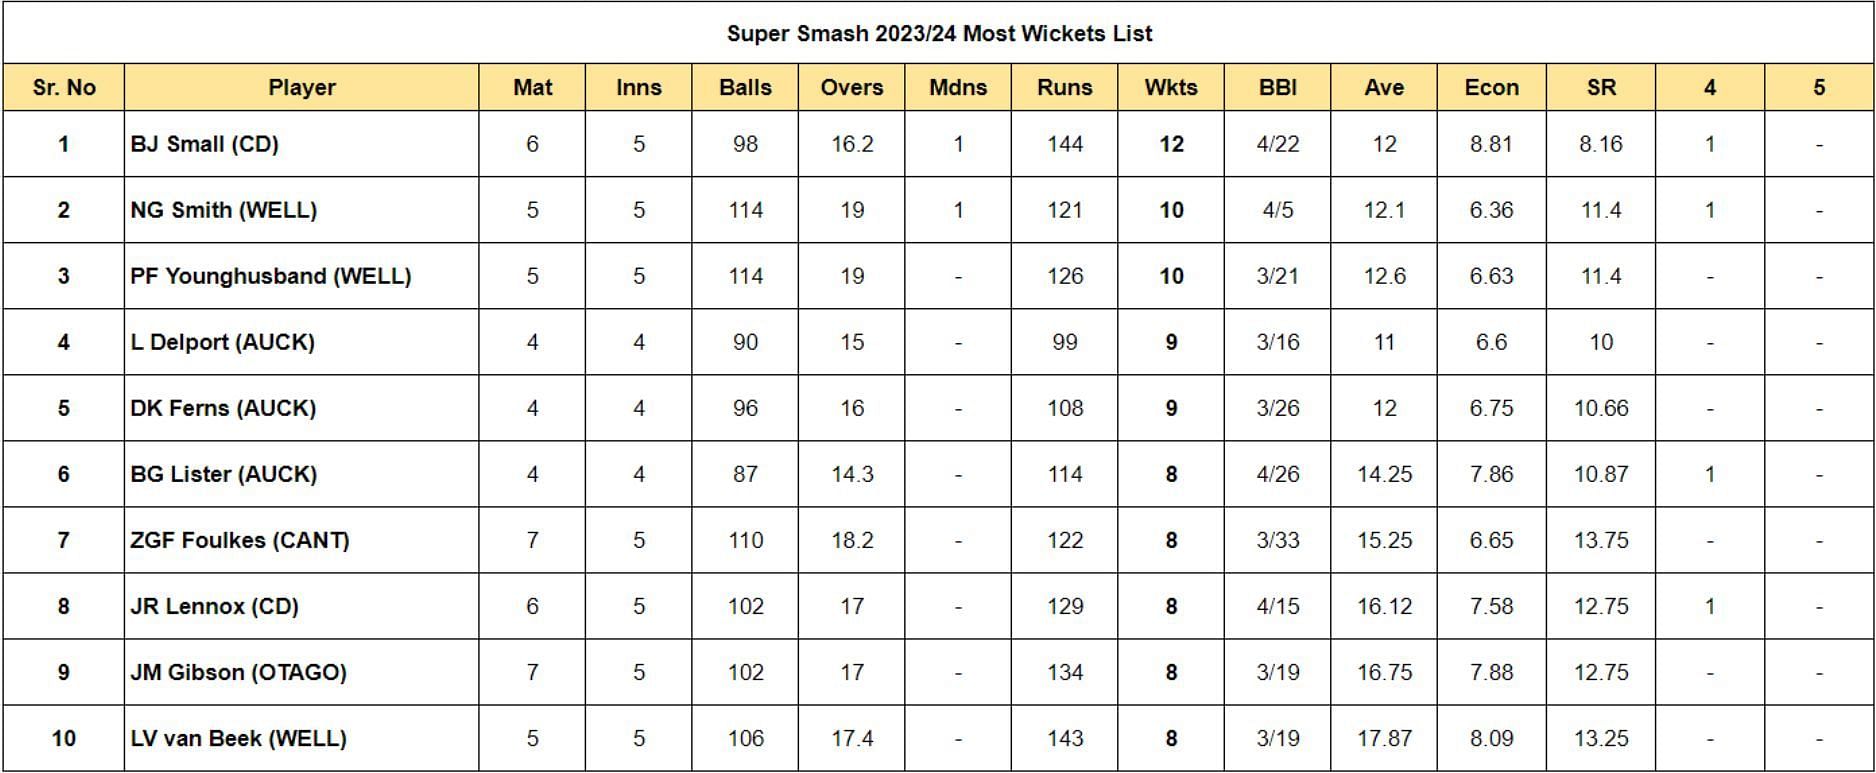 Super Smash 2023 Most Wickets List